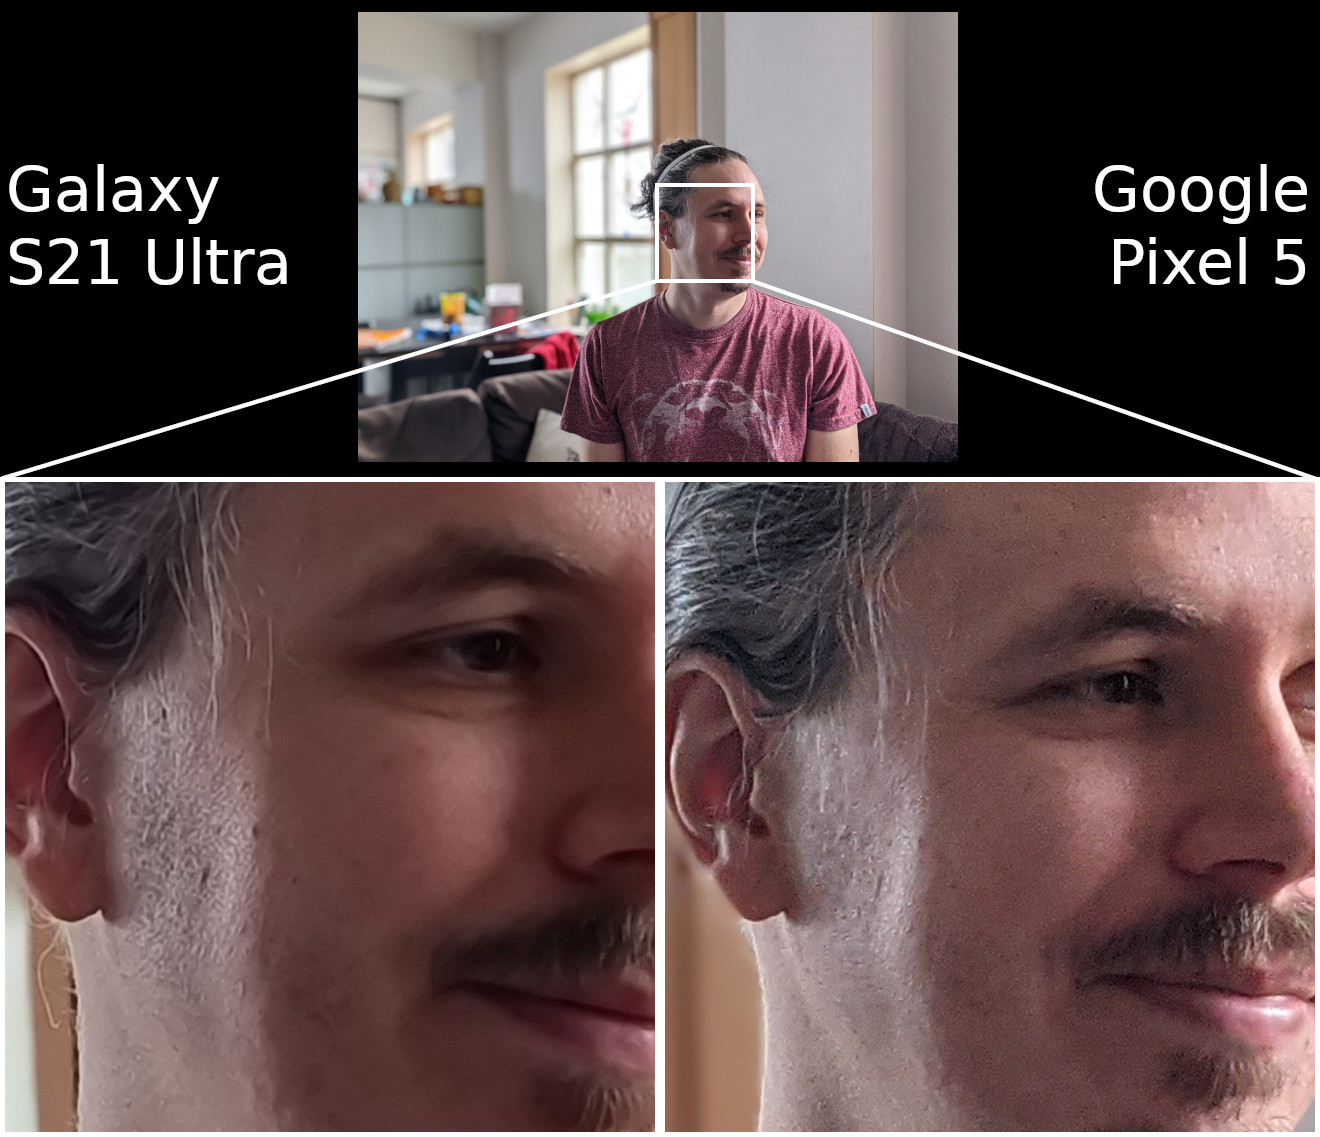 Portrait Samsung Galaxy S21 Ultra vs Google Pixel 5